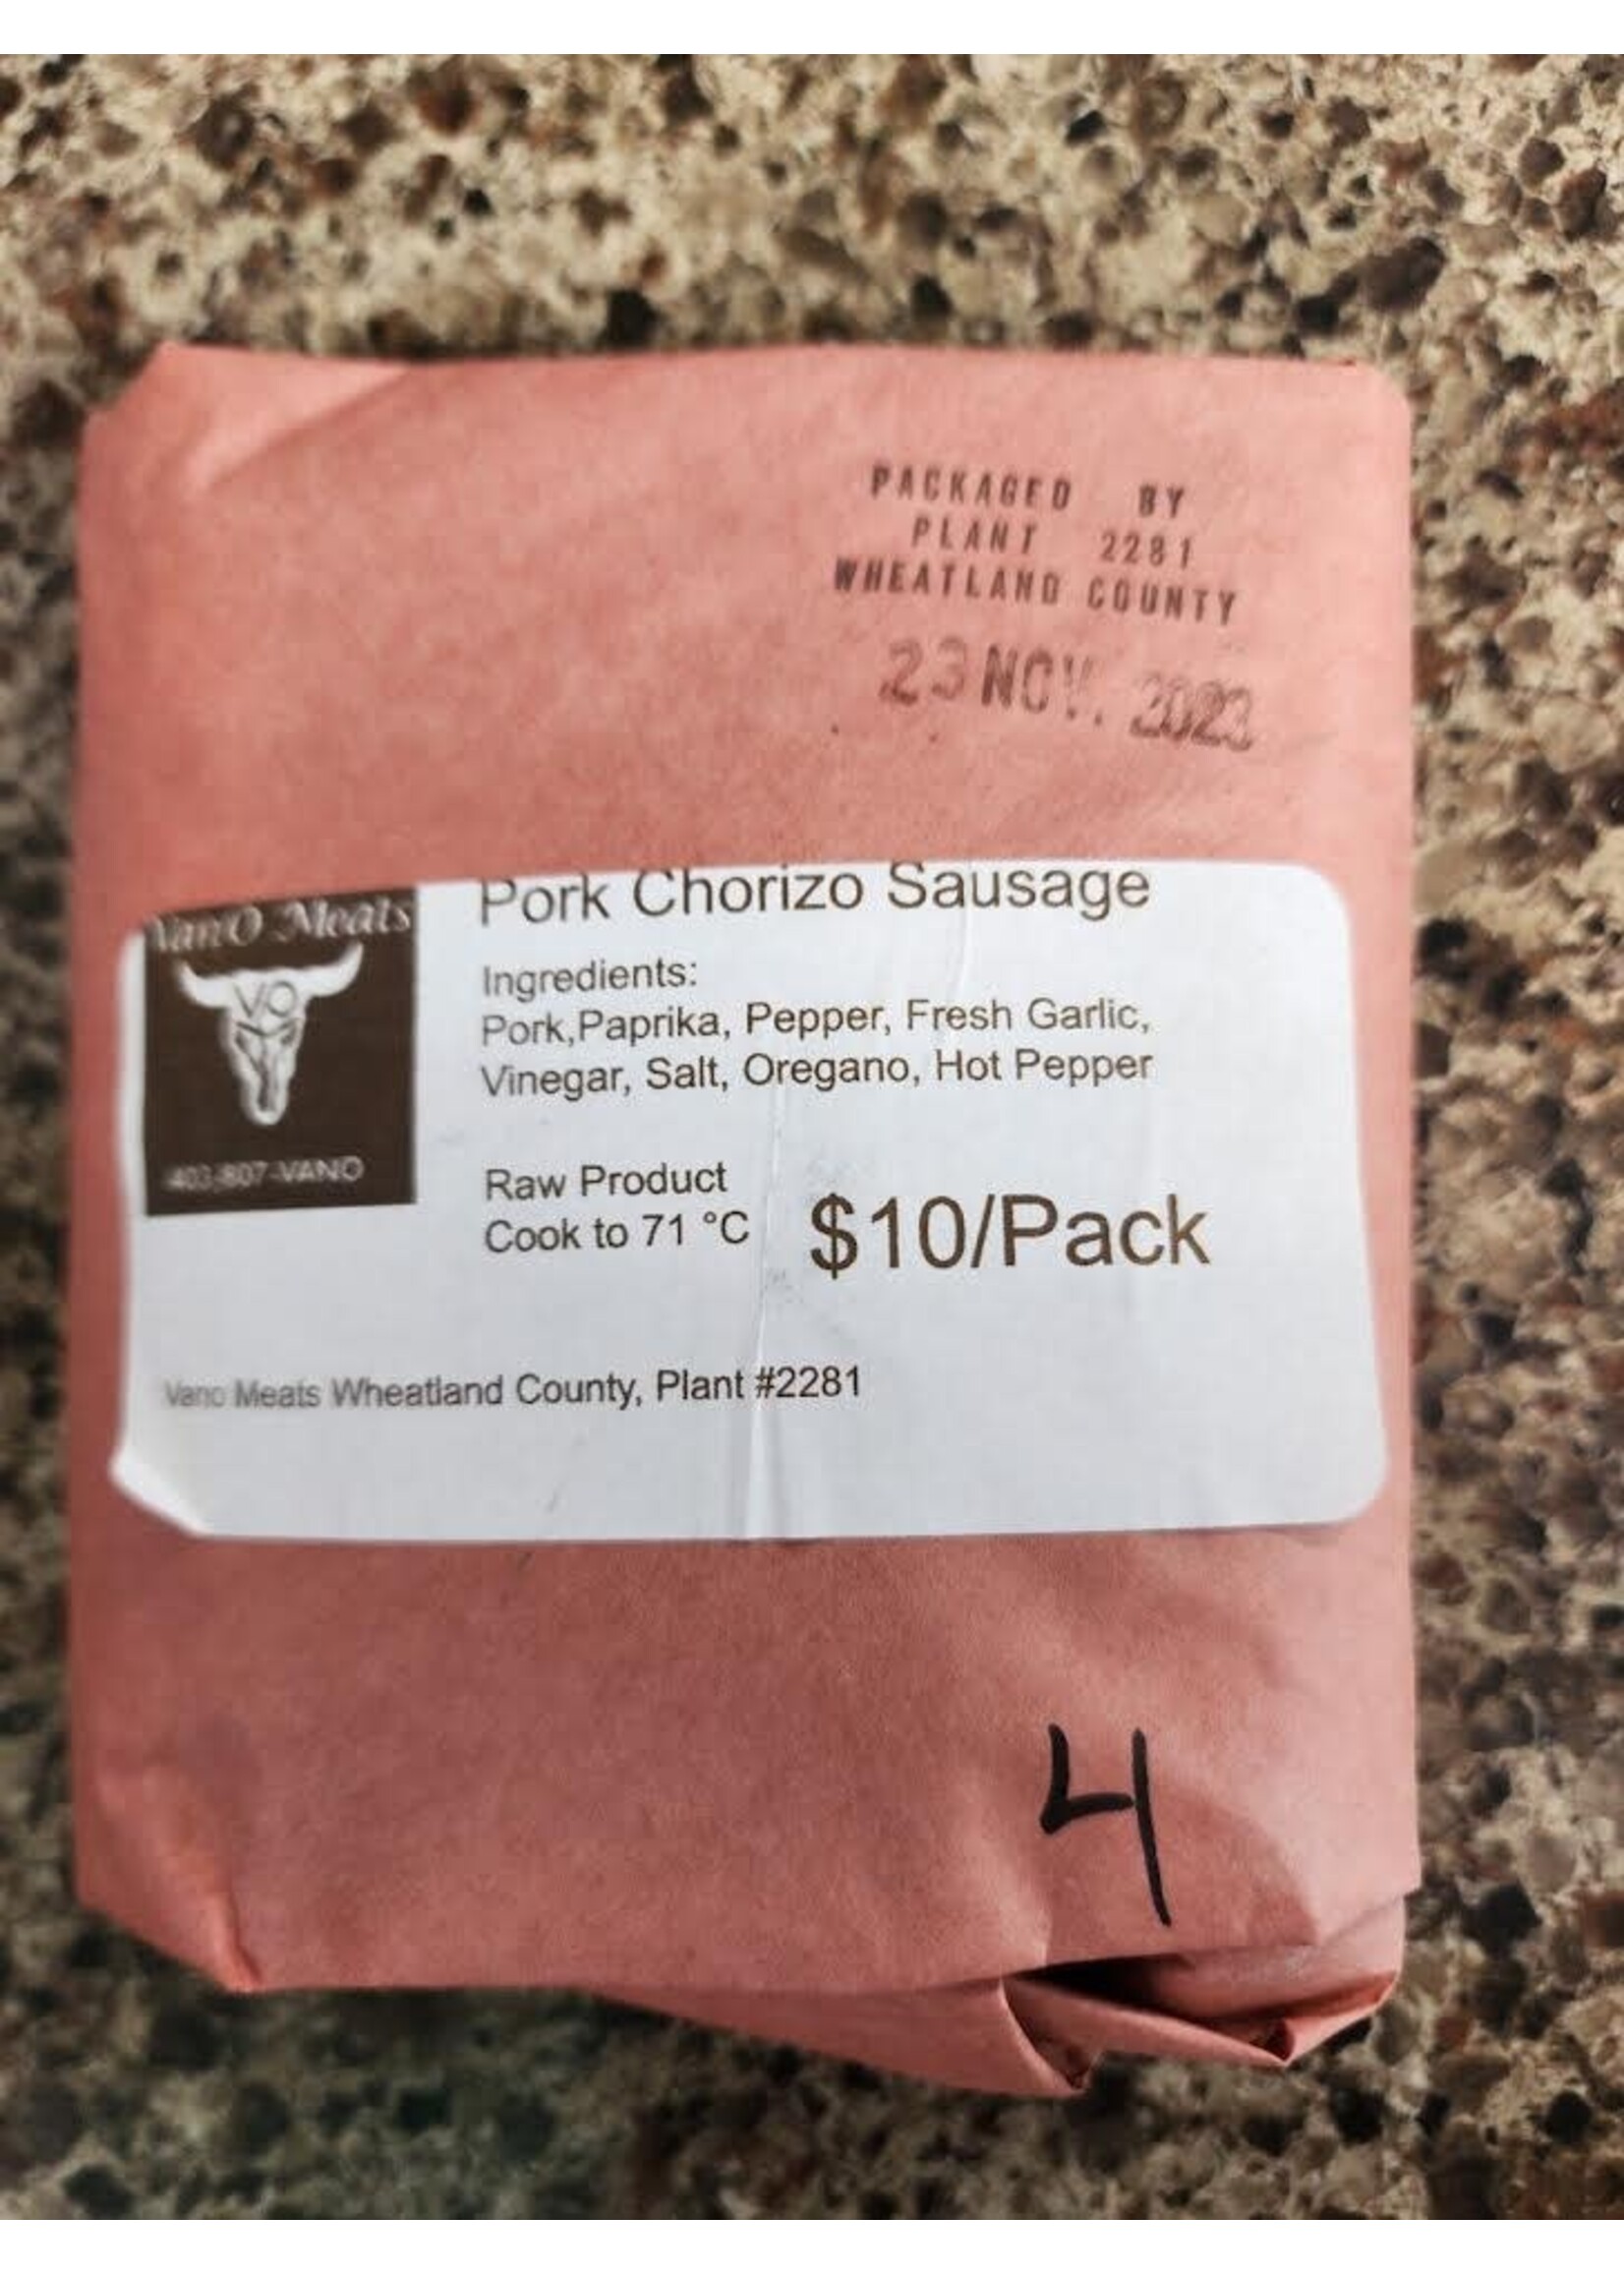 Van O Meats Chorizo - Pork Sausage